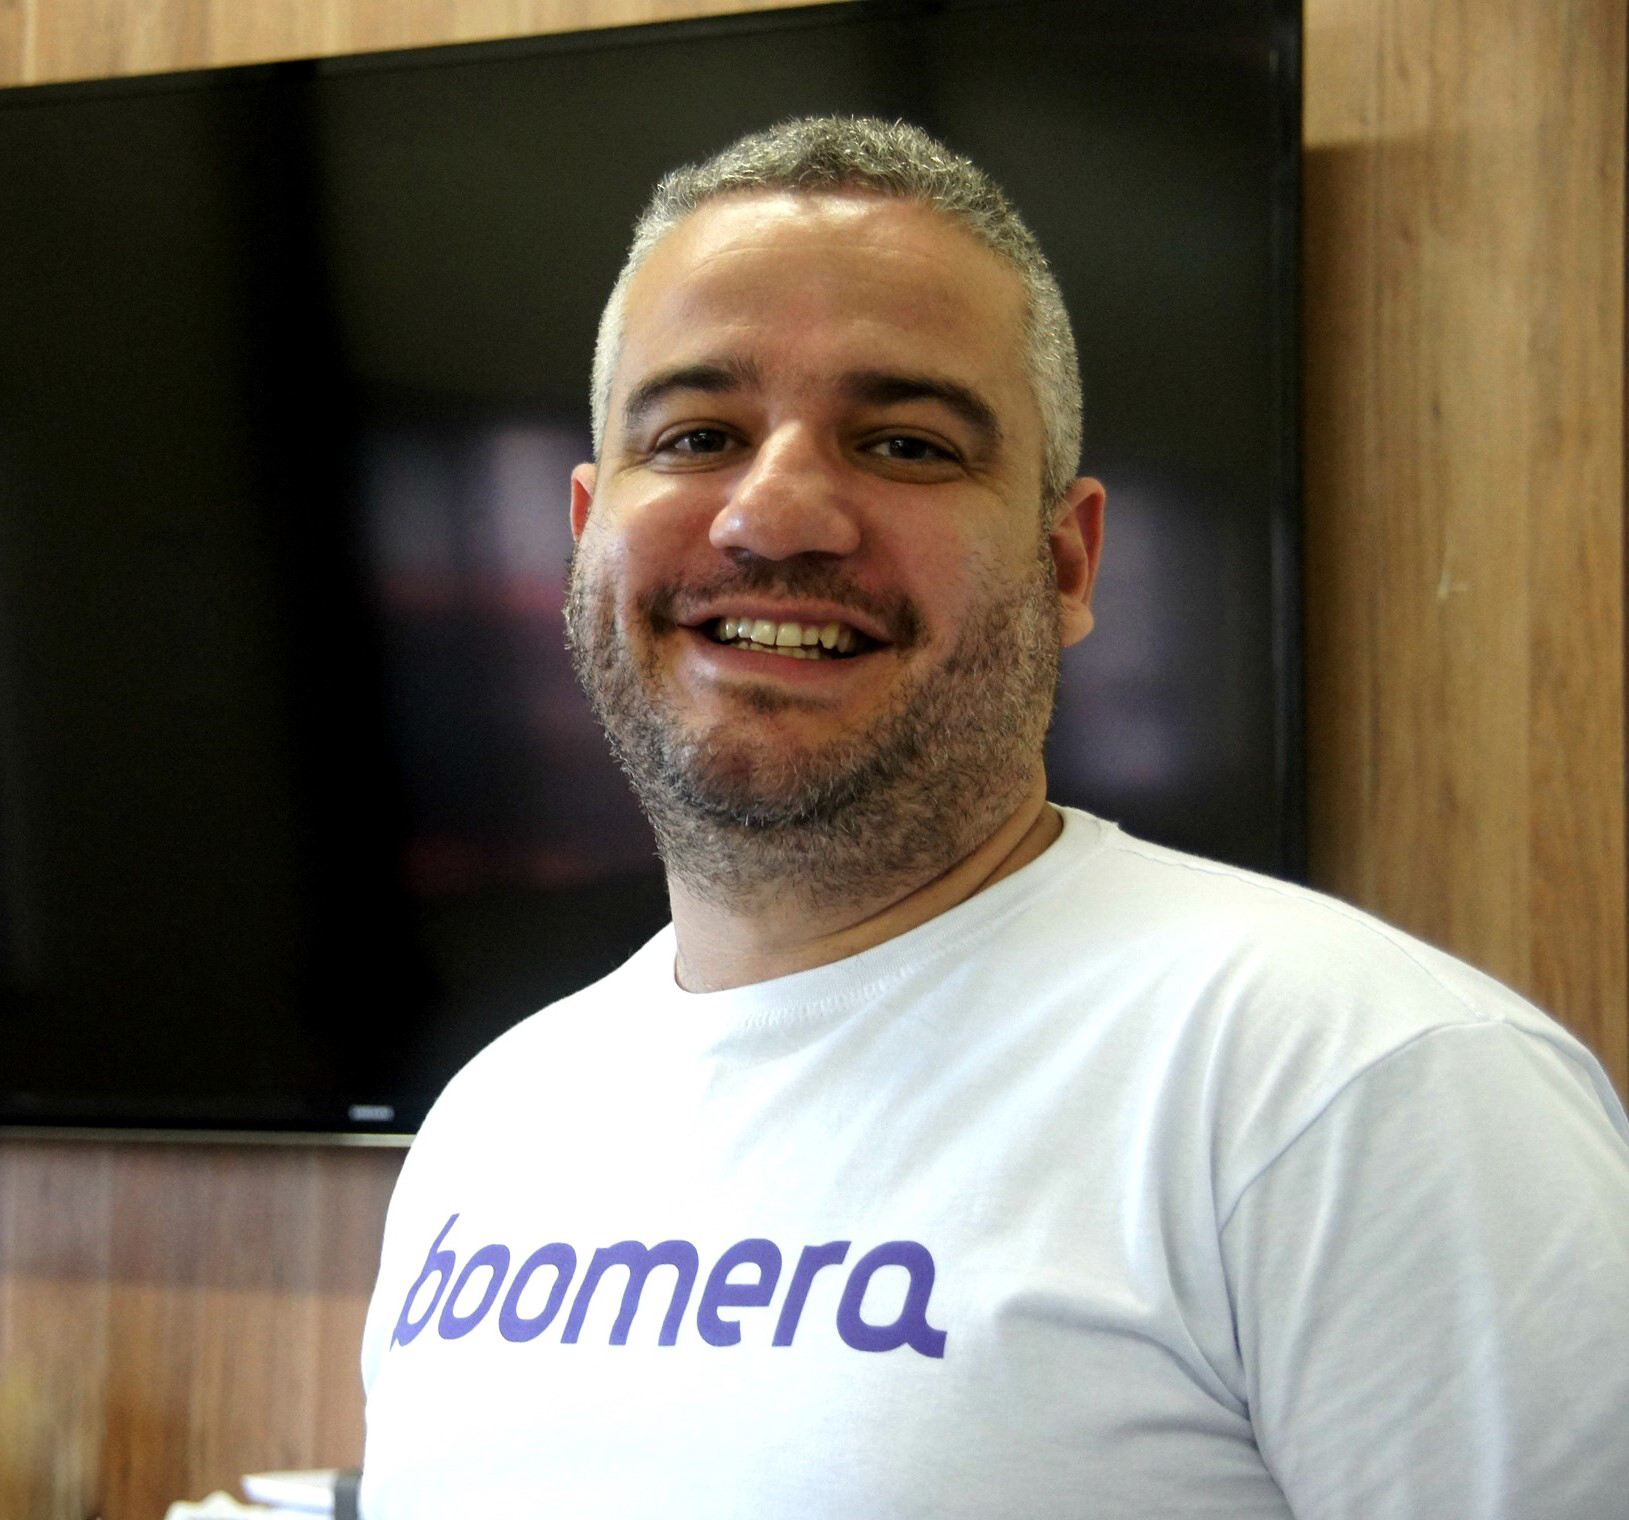 SONY Guilherme Brammer, CEO e Founder da Boomera